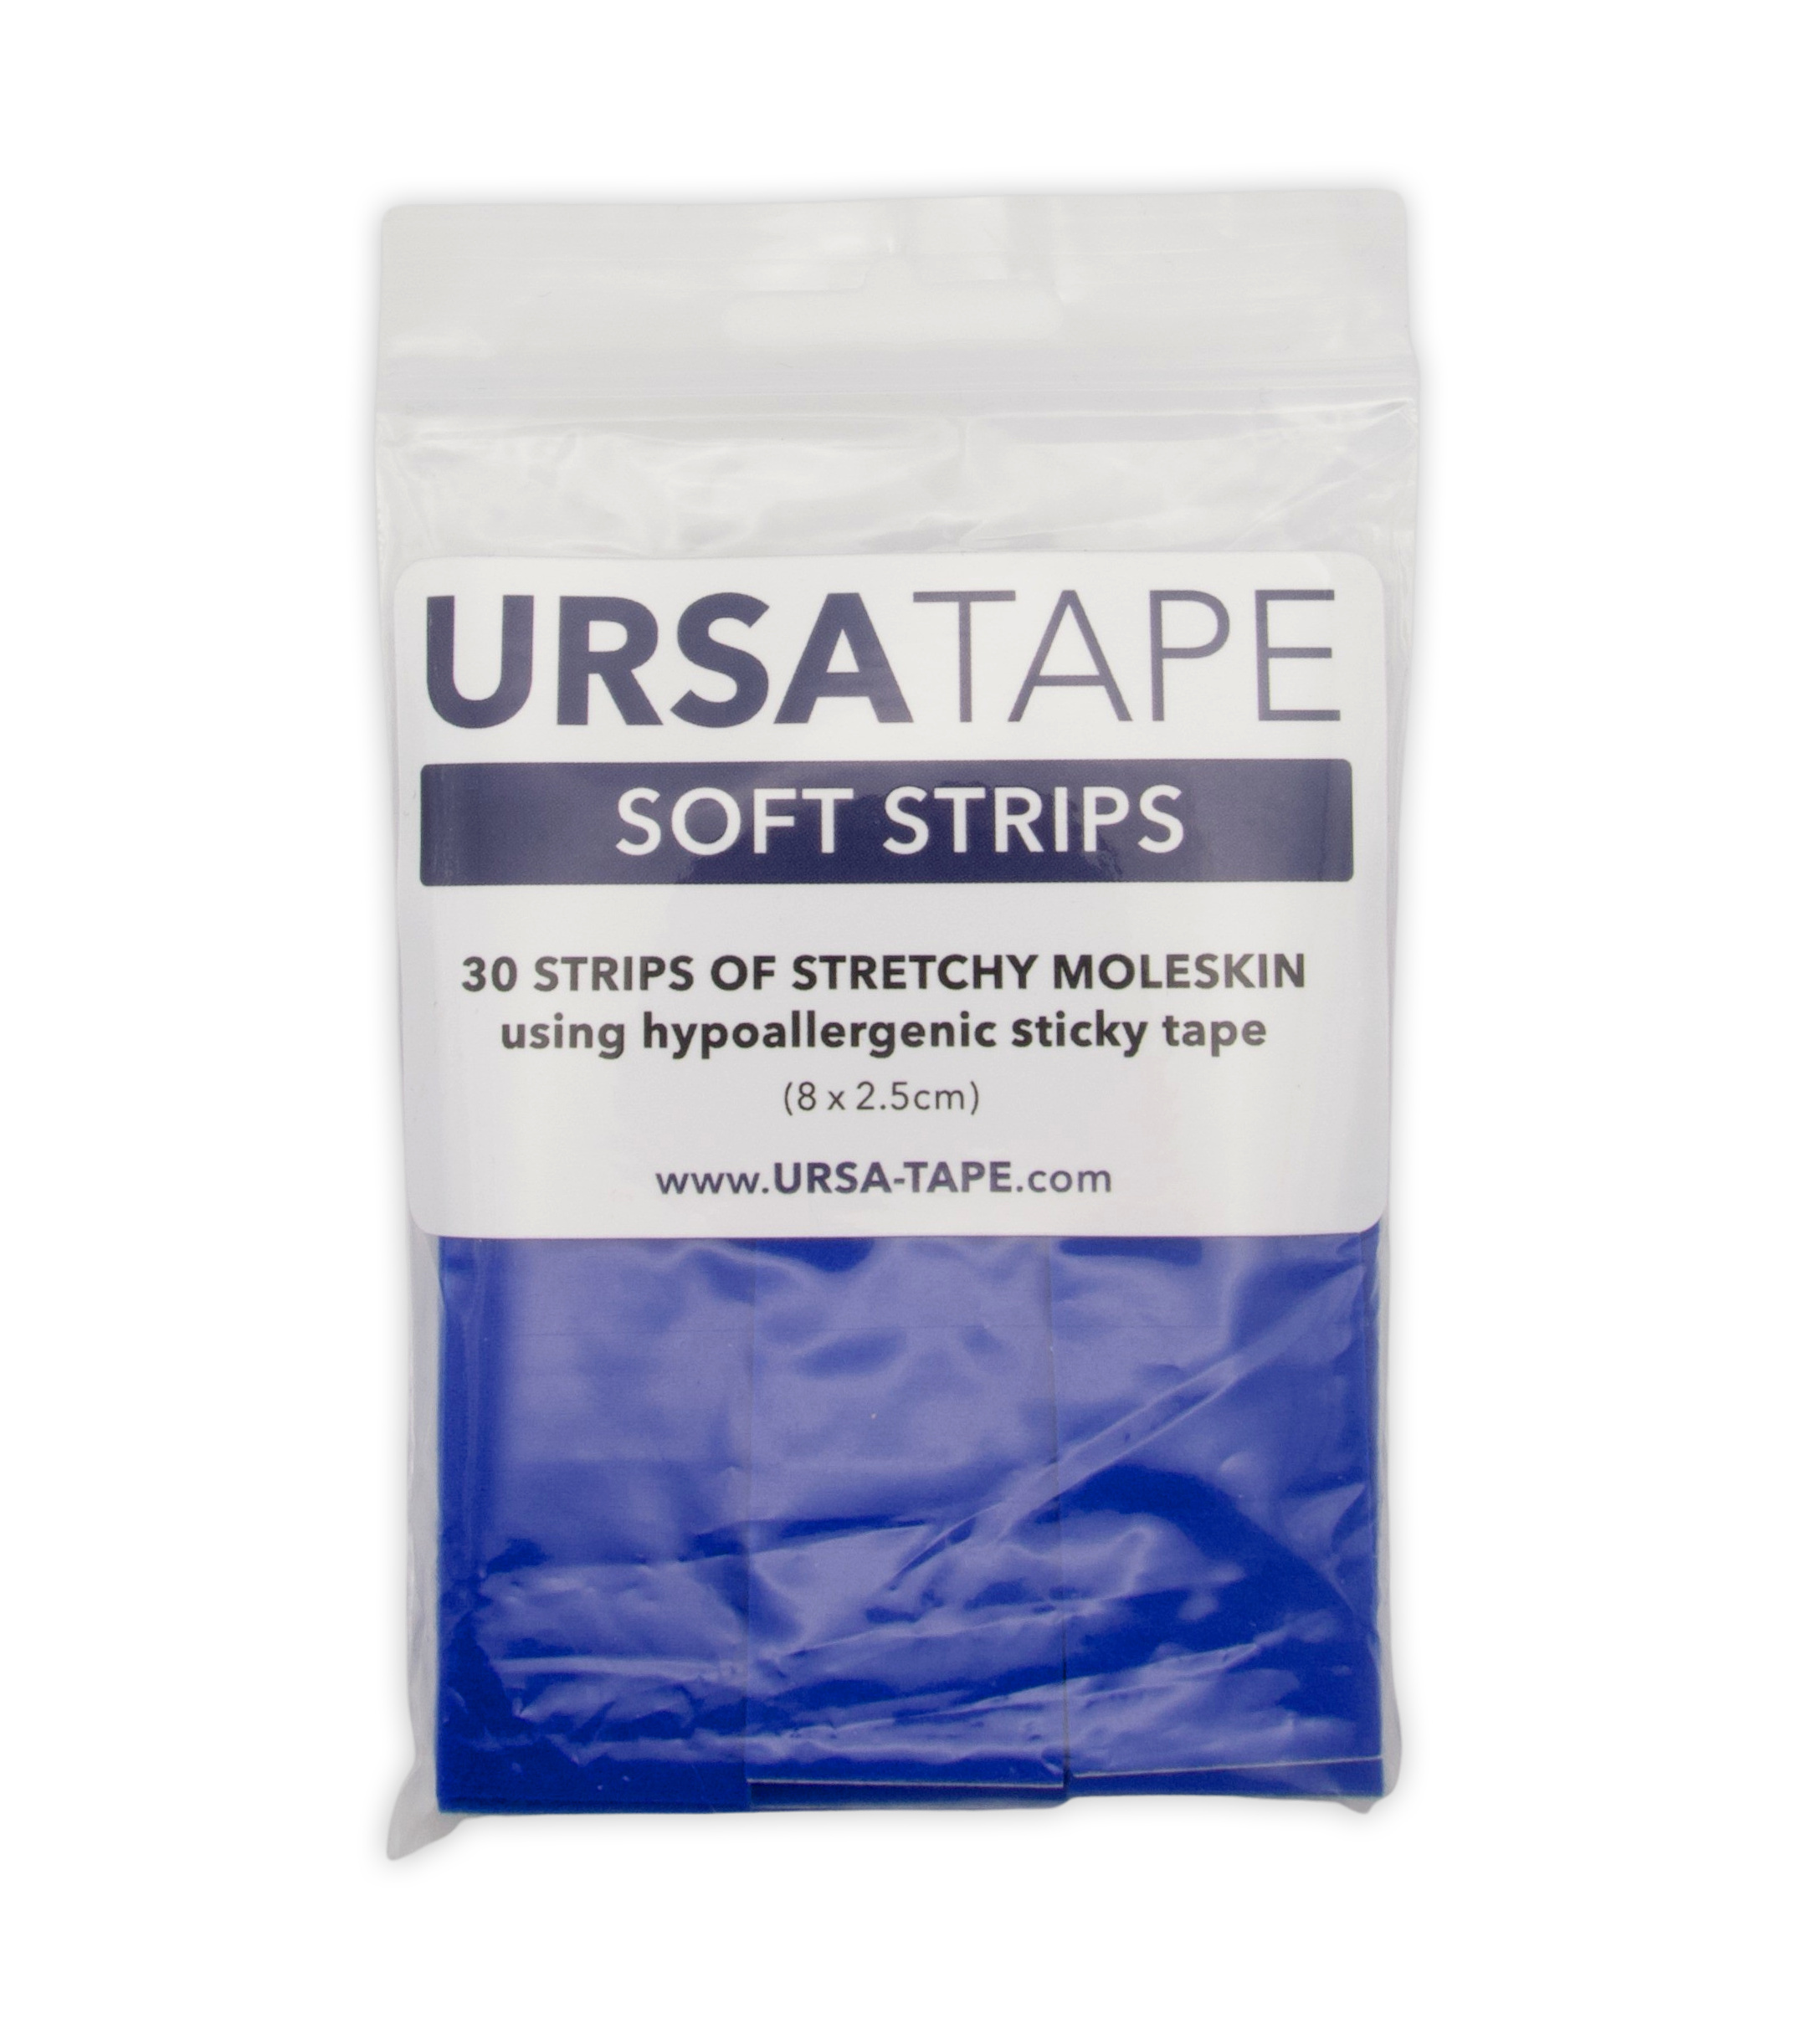 Ursa Tape - Blue Chroma Key Small Soft Strips (30 Strips, 8cm x 2.5cm)